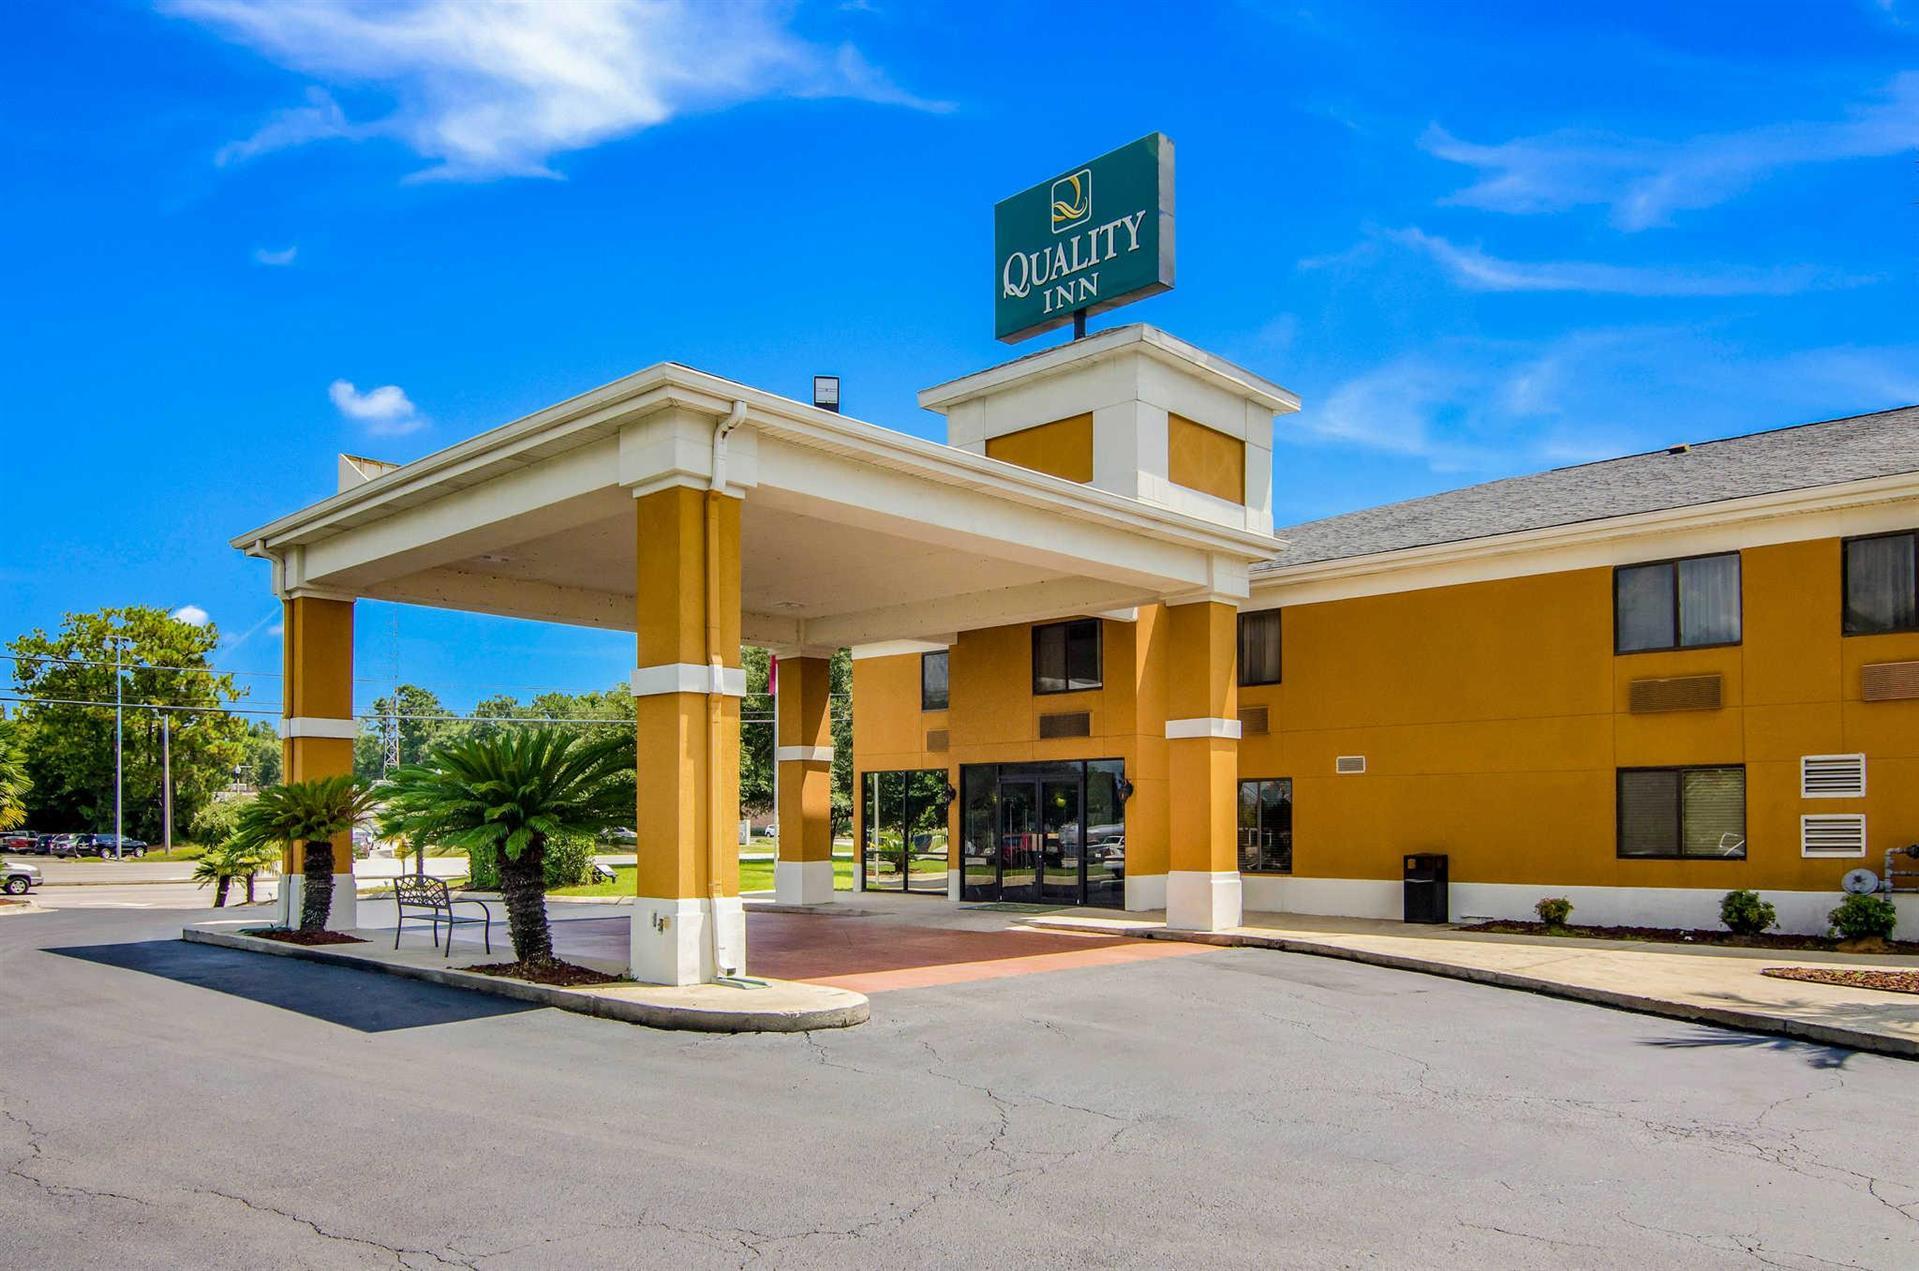 Quality Inn near University of Mobile in Saraland, AL